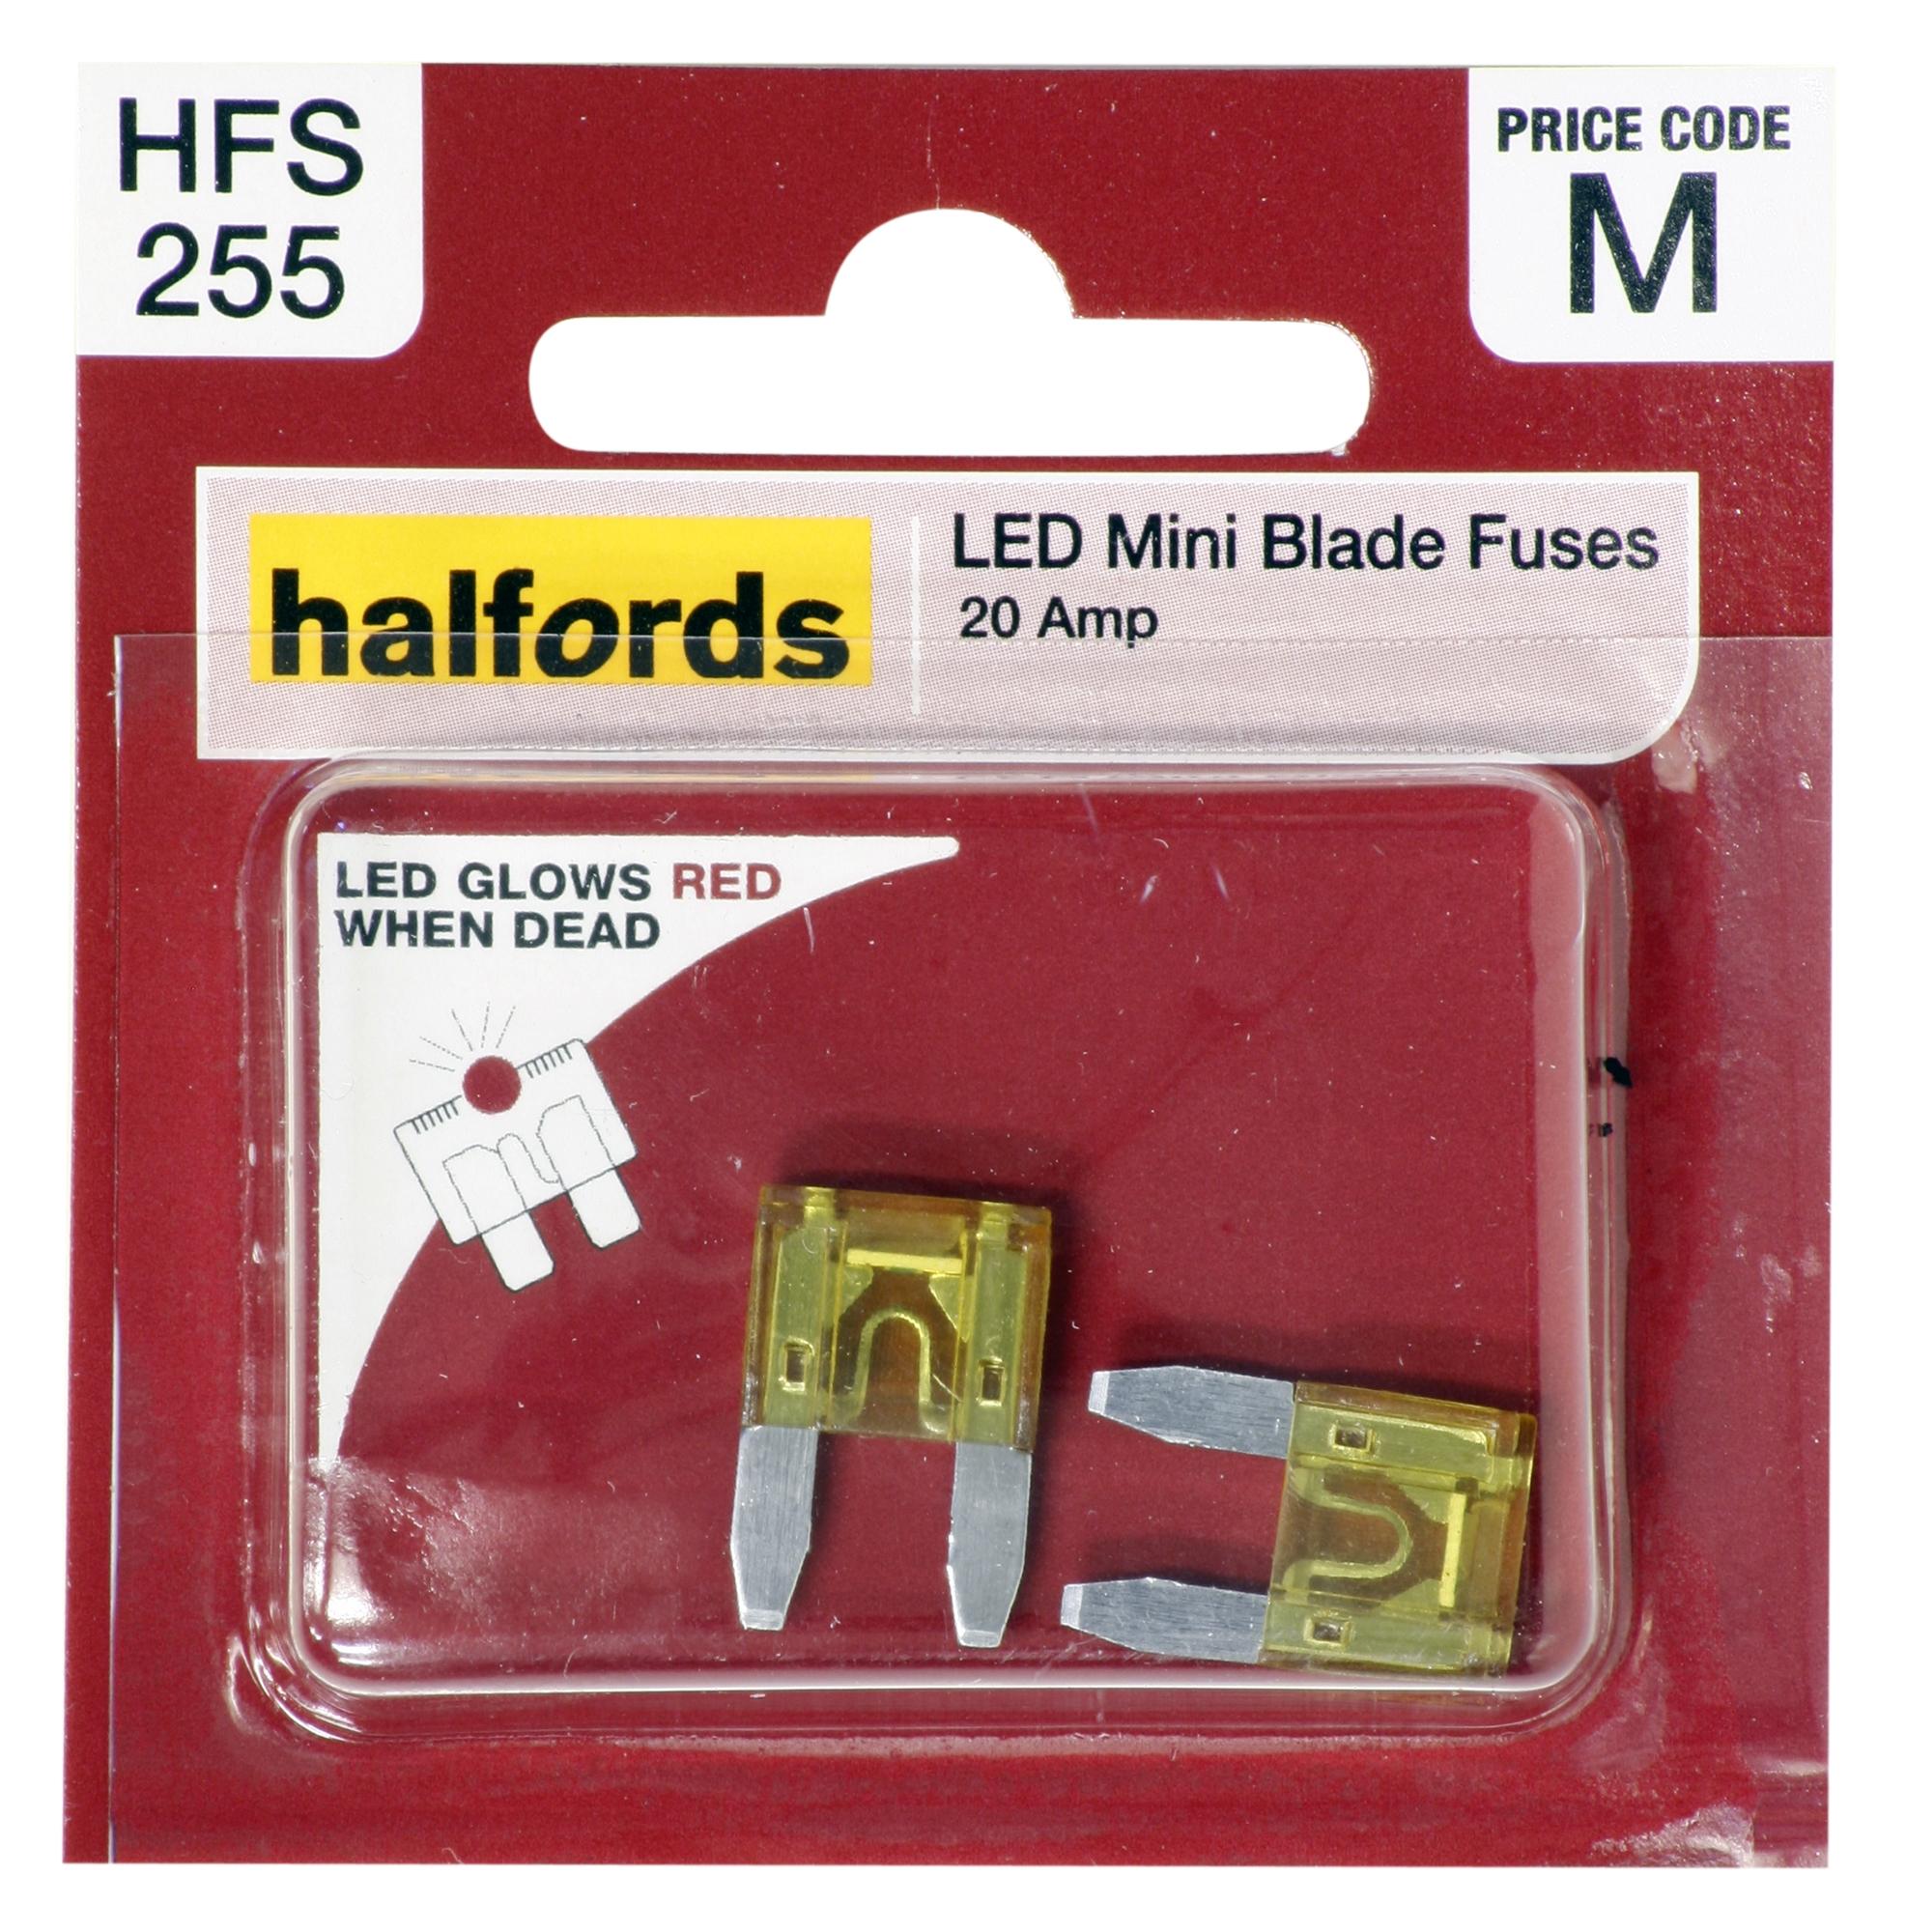 Halfords Led Mini Blade Fuses 20 Amp (Hfs255)